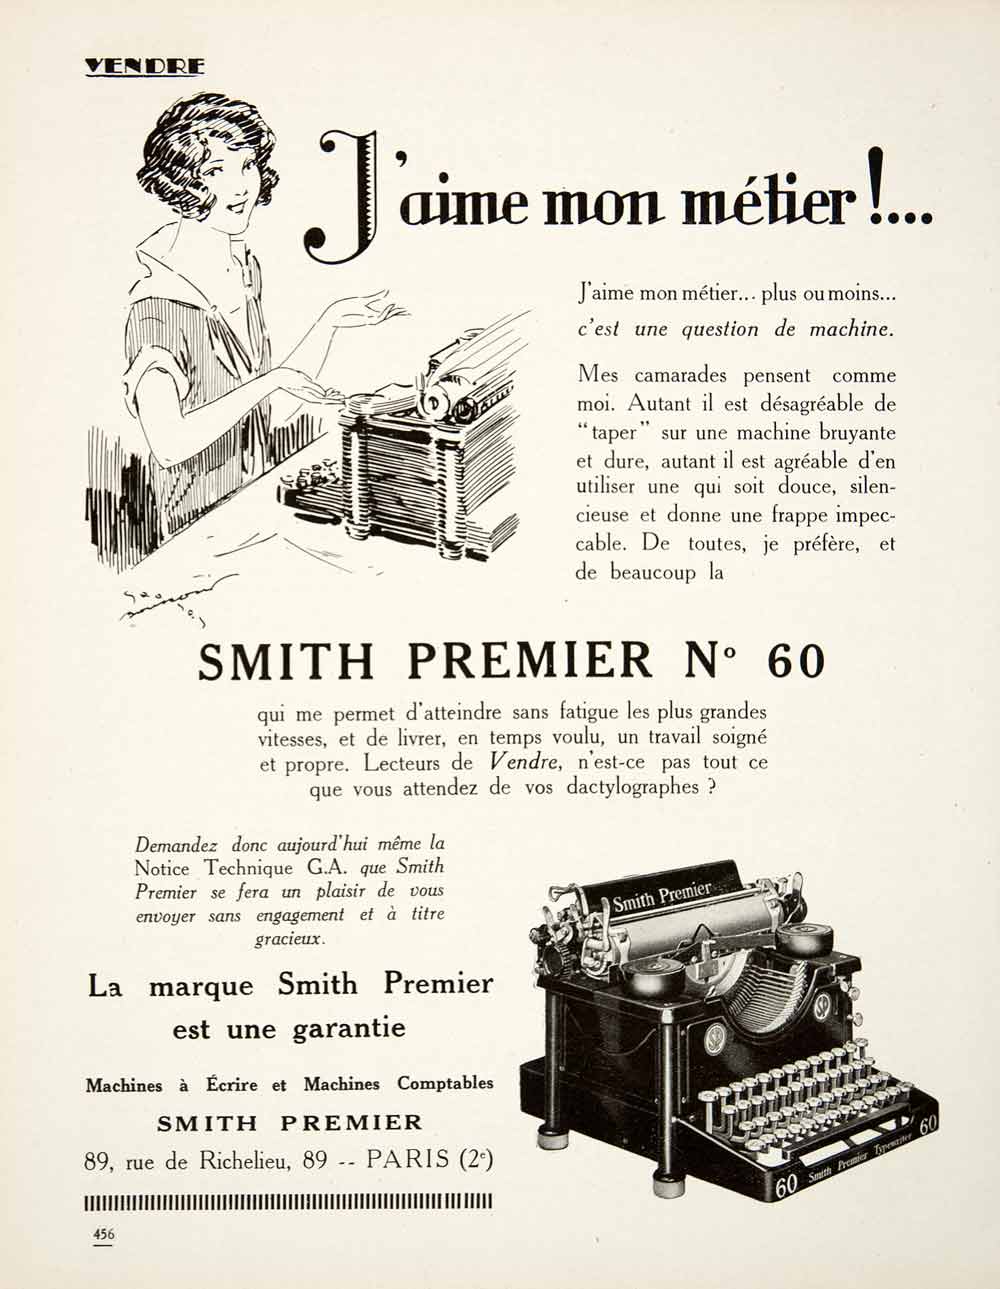 1925 Ad Smith Premier No. 60 Typewriter 89 Rue Richelieu Paris Secretary VEN4